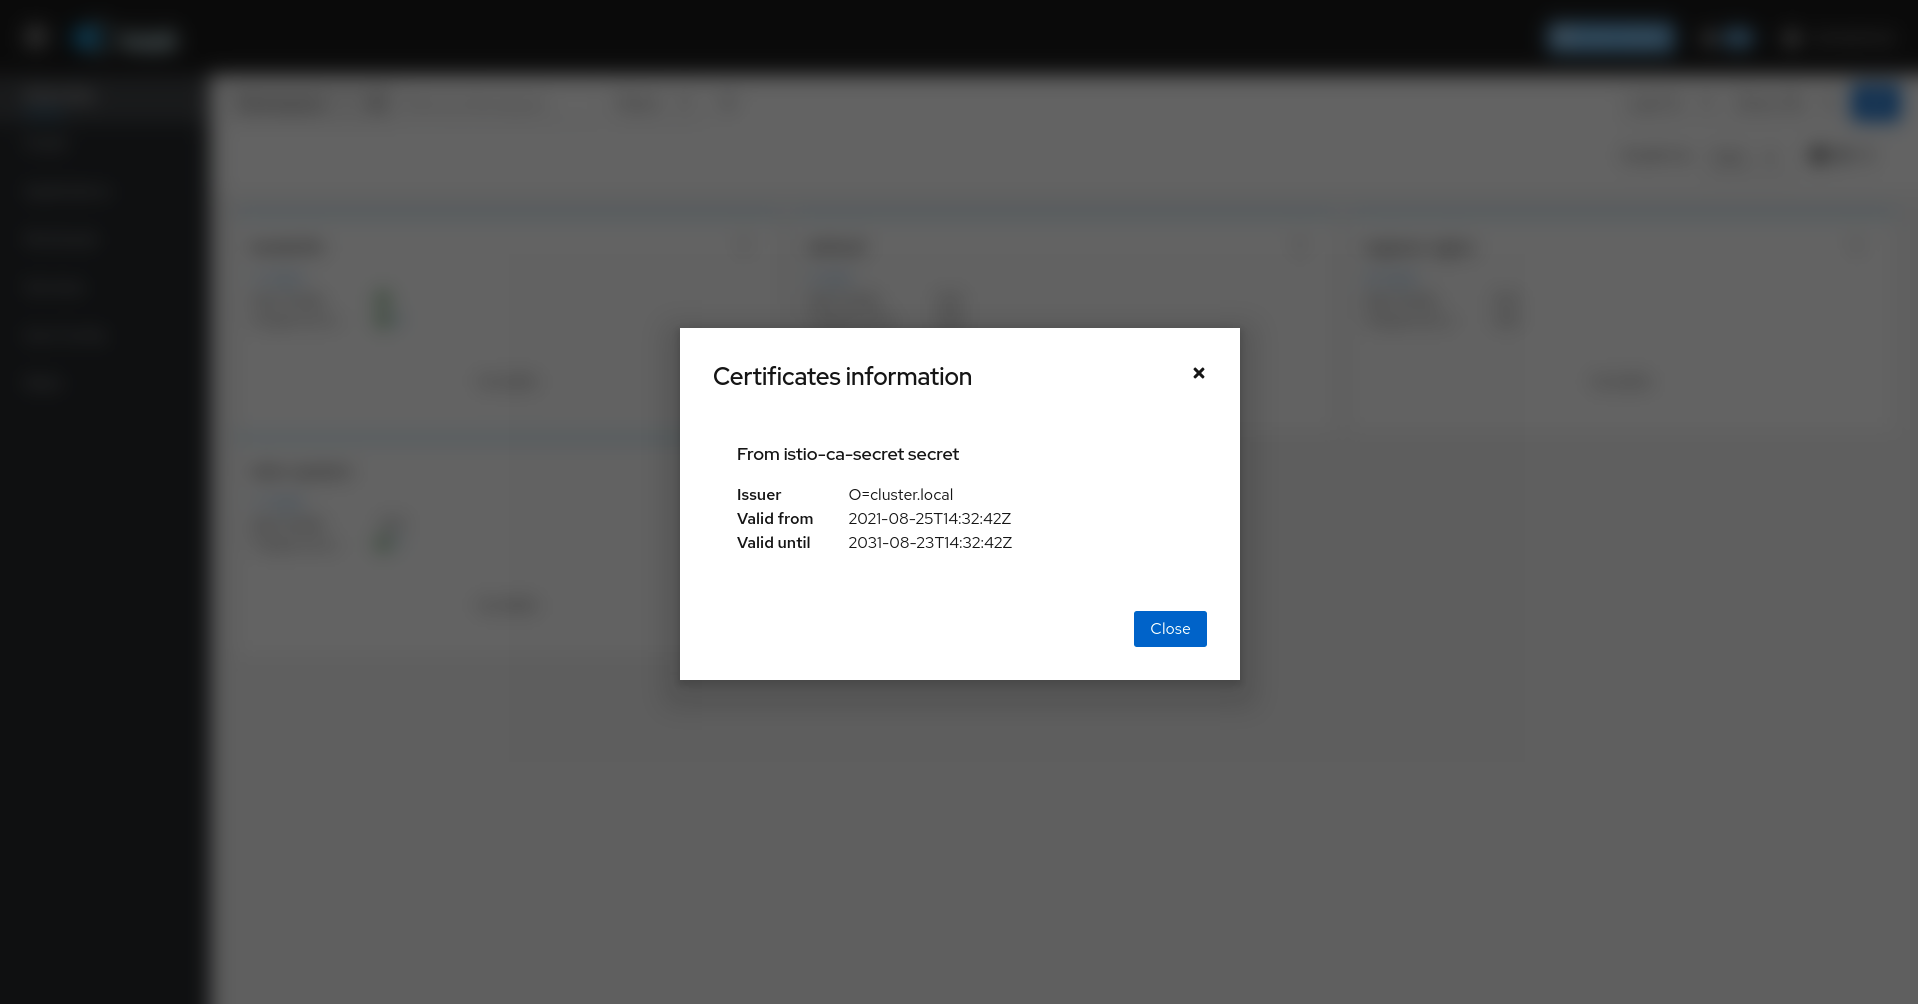 Certificates information